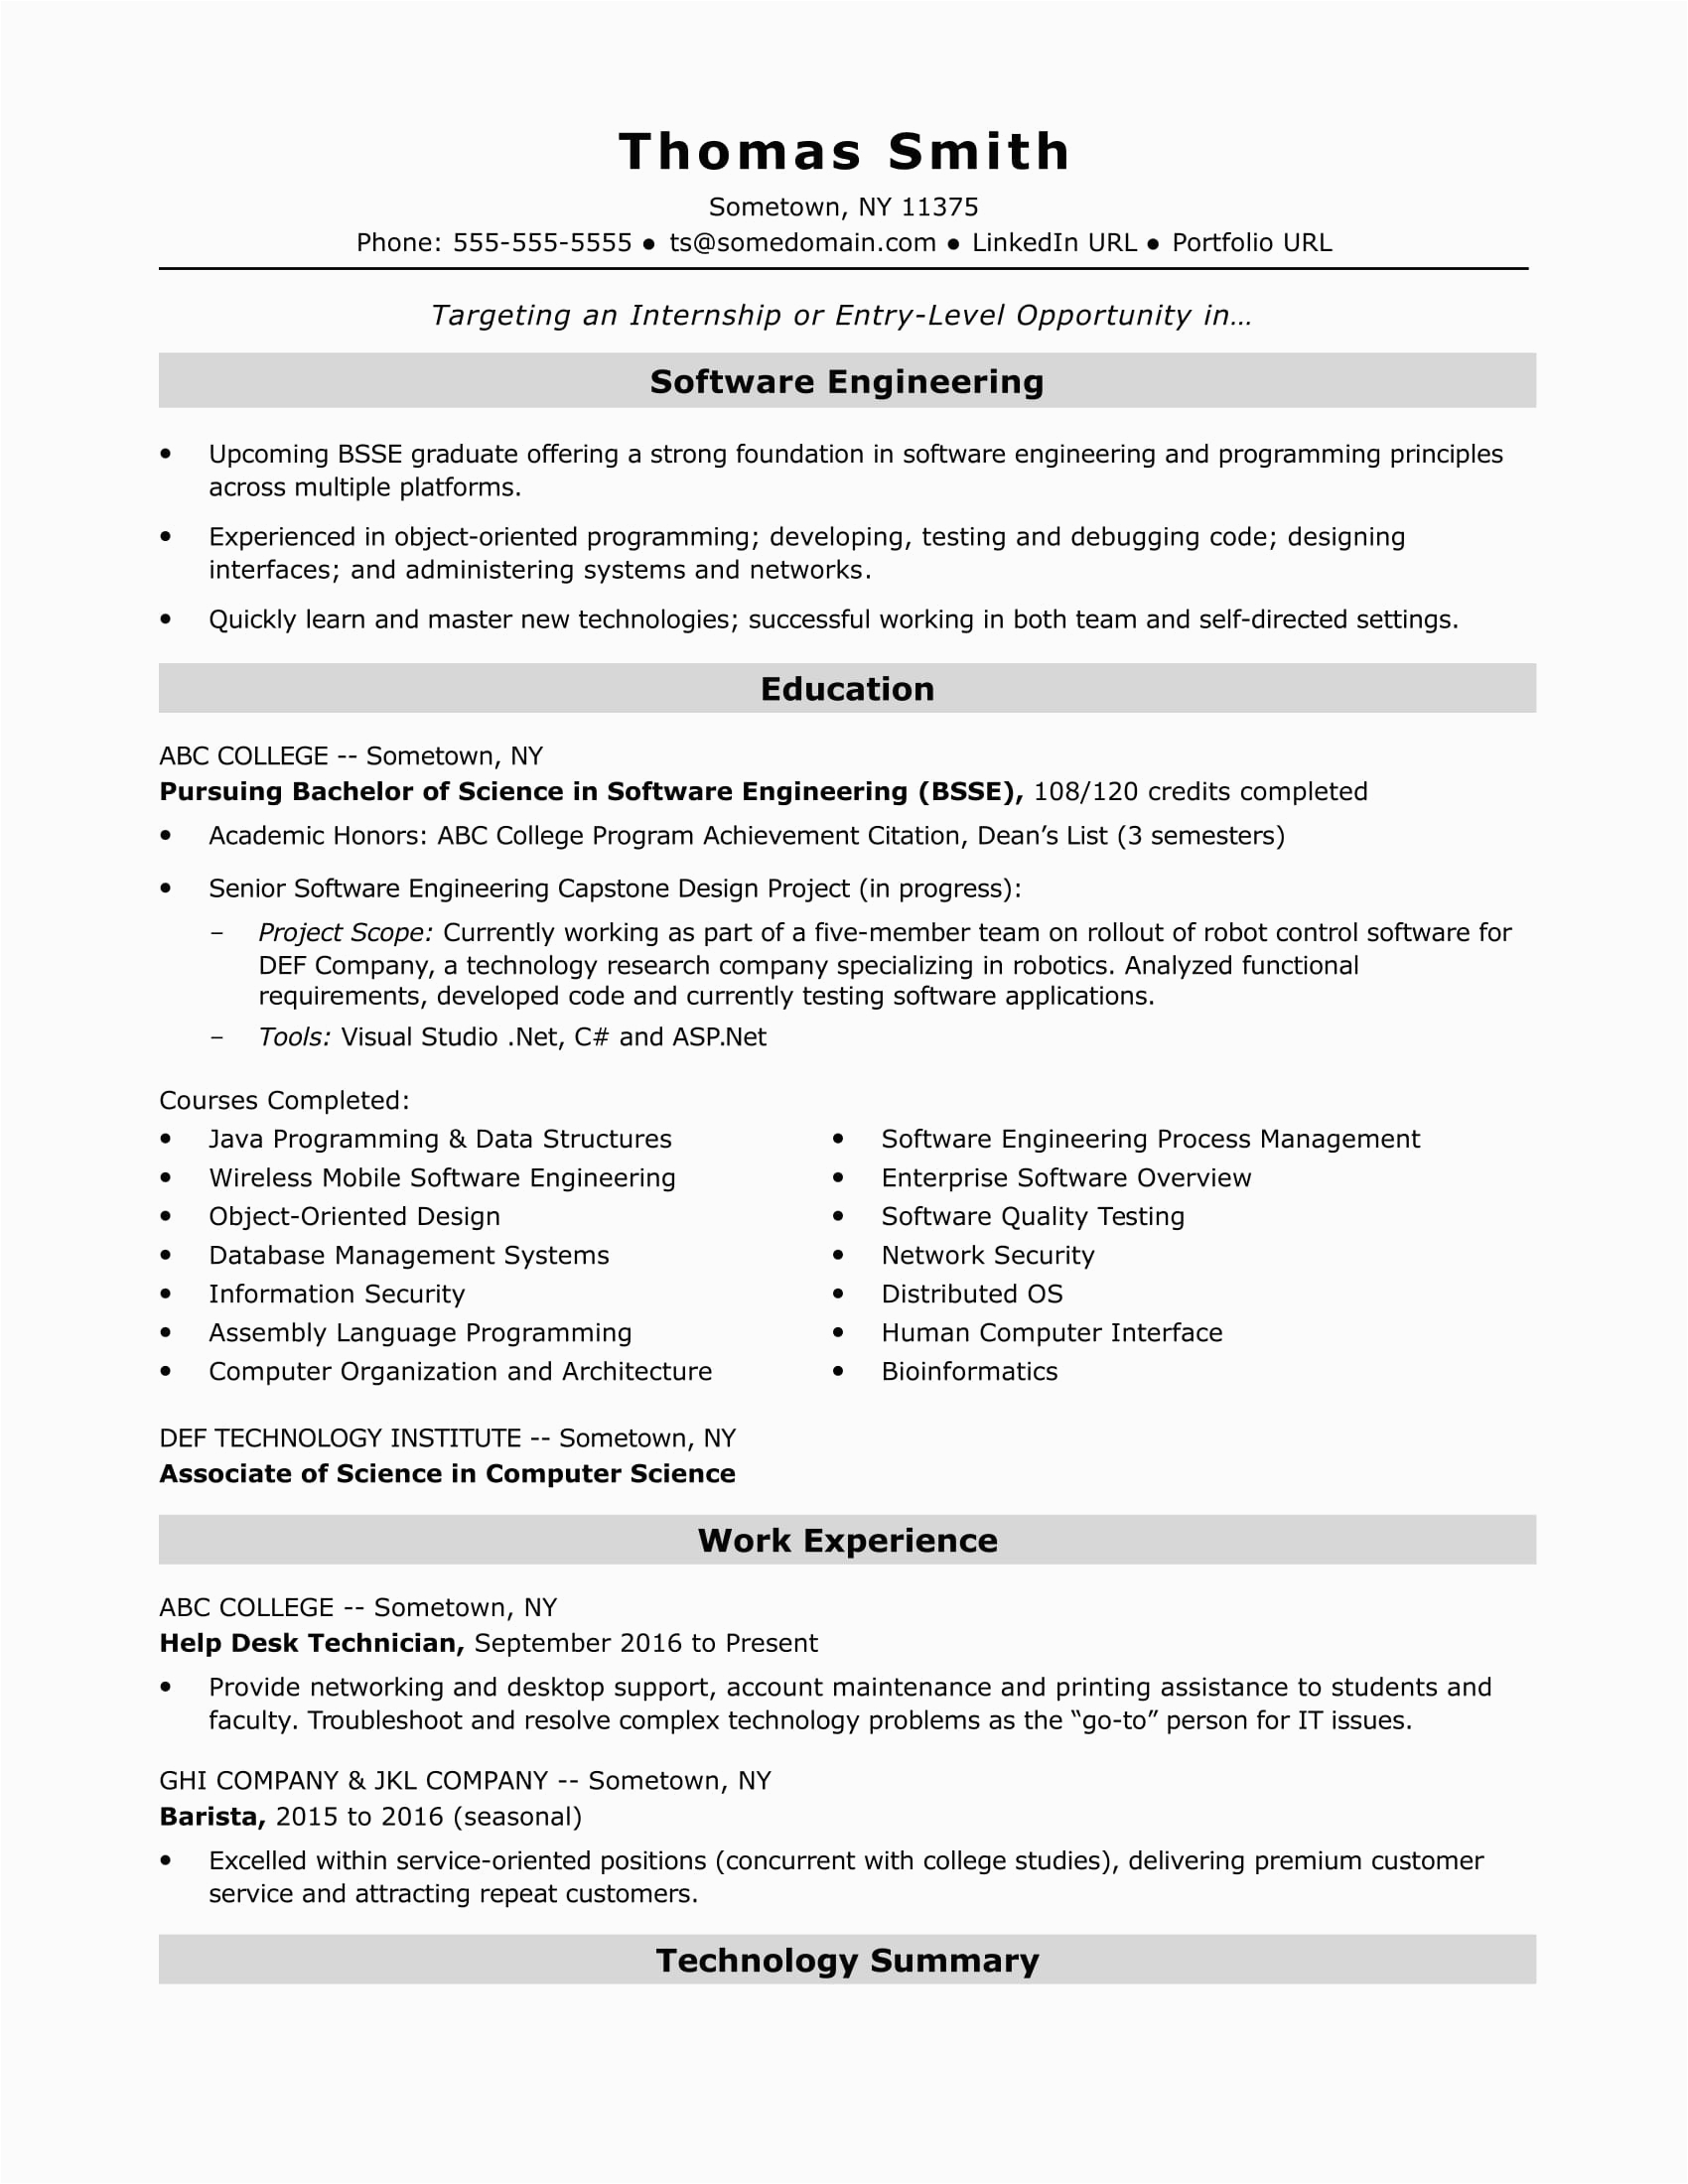 Sample Rntry Level Resume On Computer Engineerng Entry Level software Engineer Resume Sample